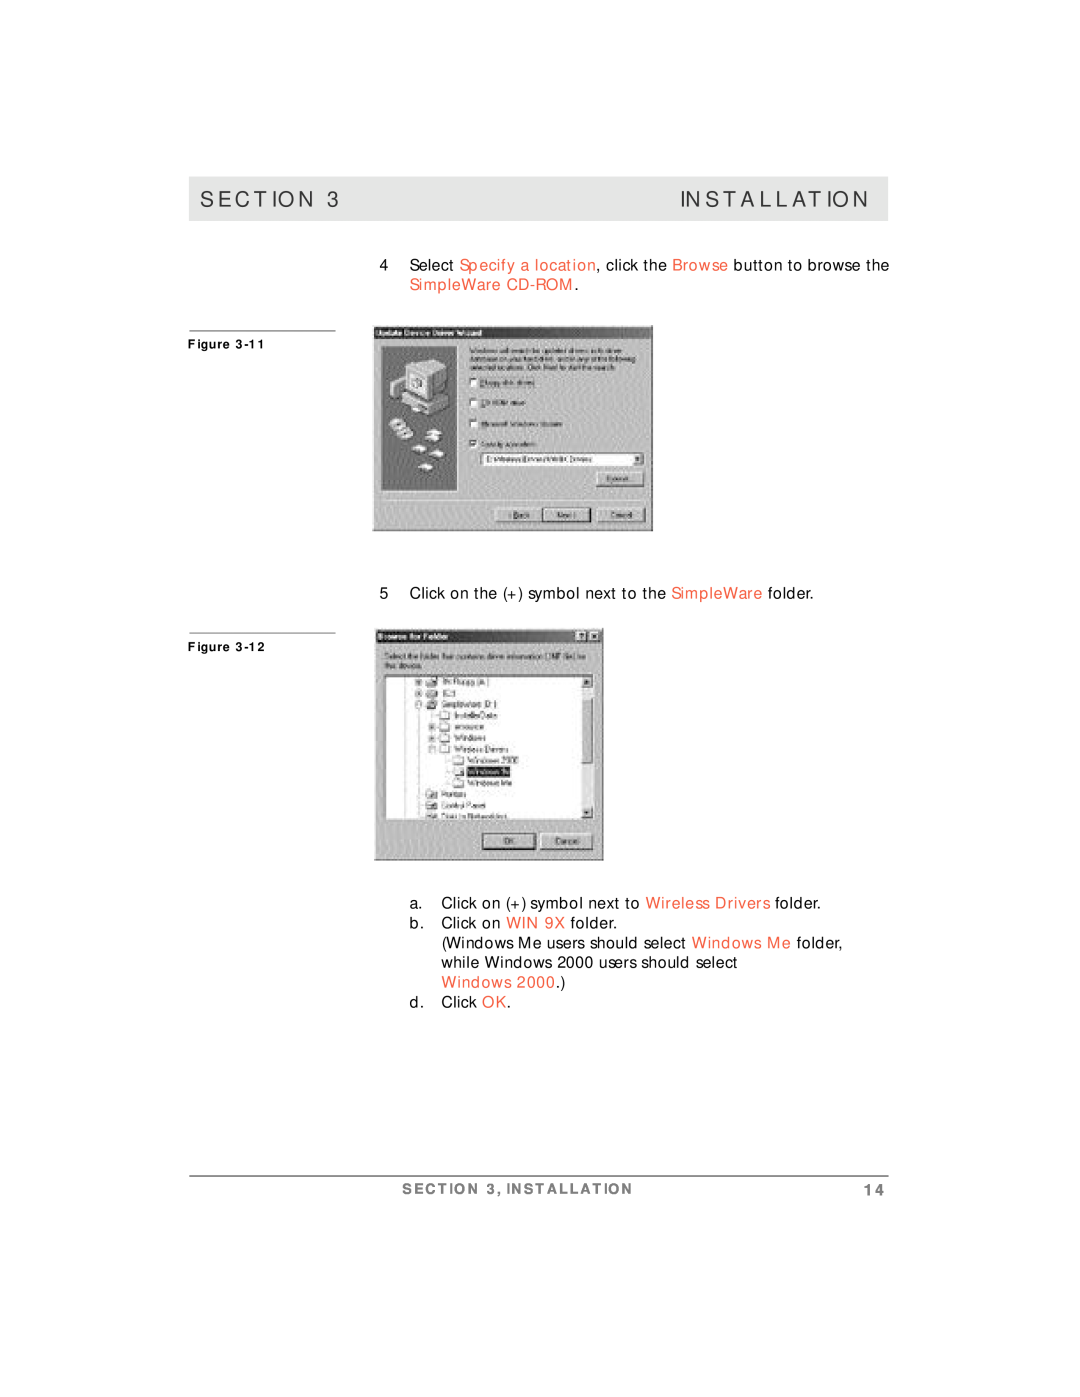 Motorola simplefi manual Section, Installation, b.Click on WIN 9X folder, Windows 